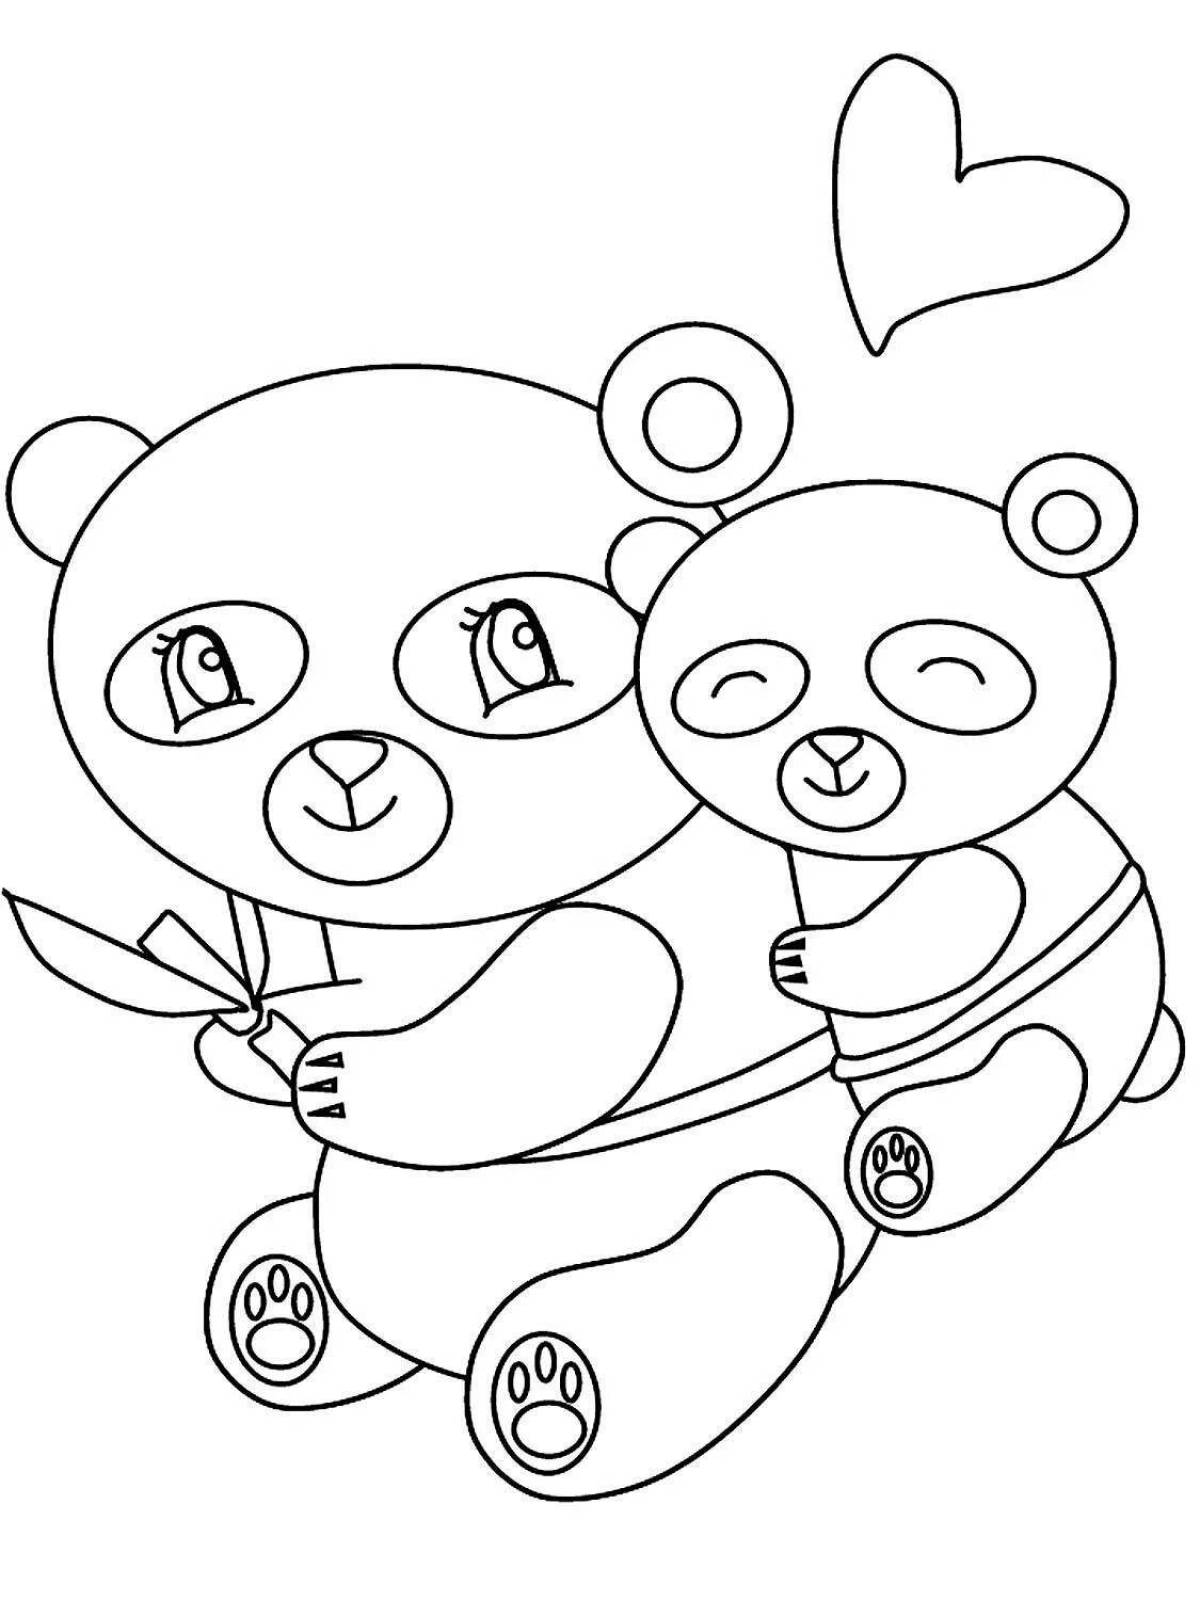 Naughty panda bear coloring book